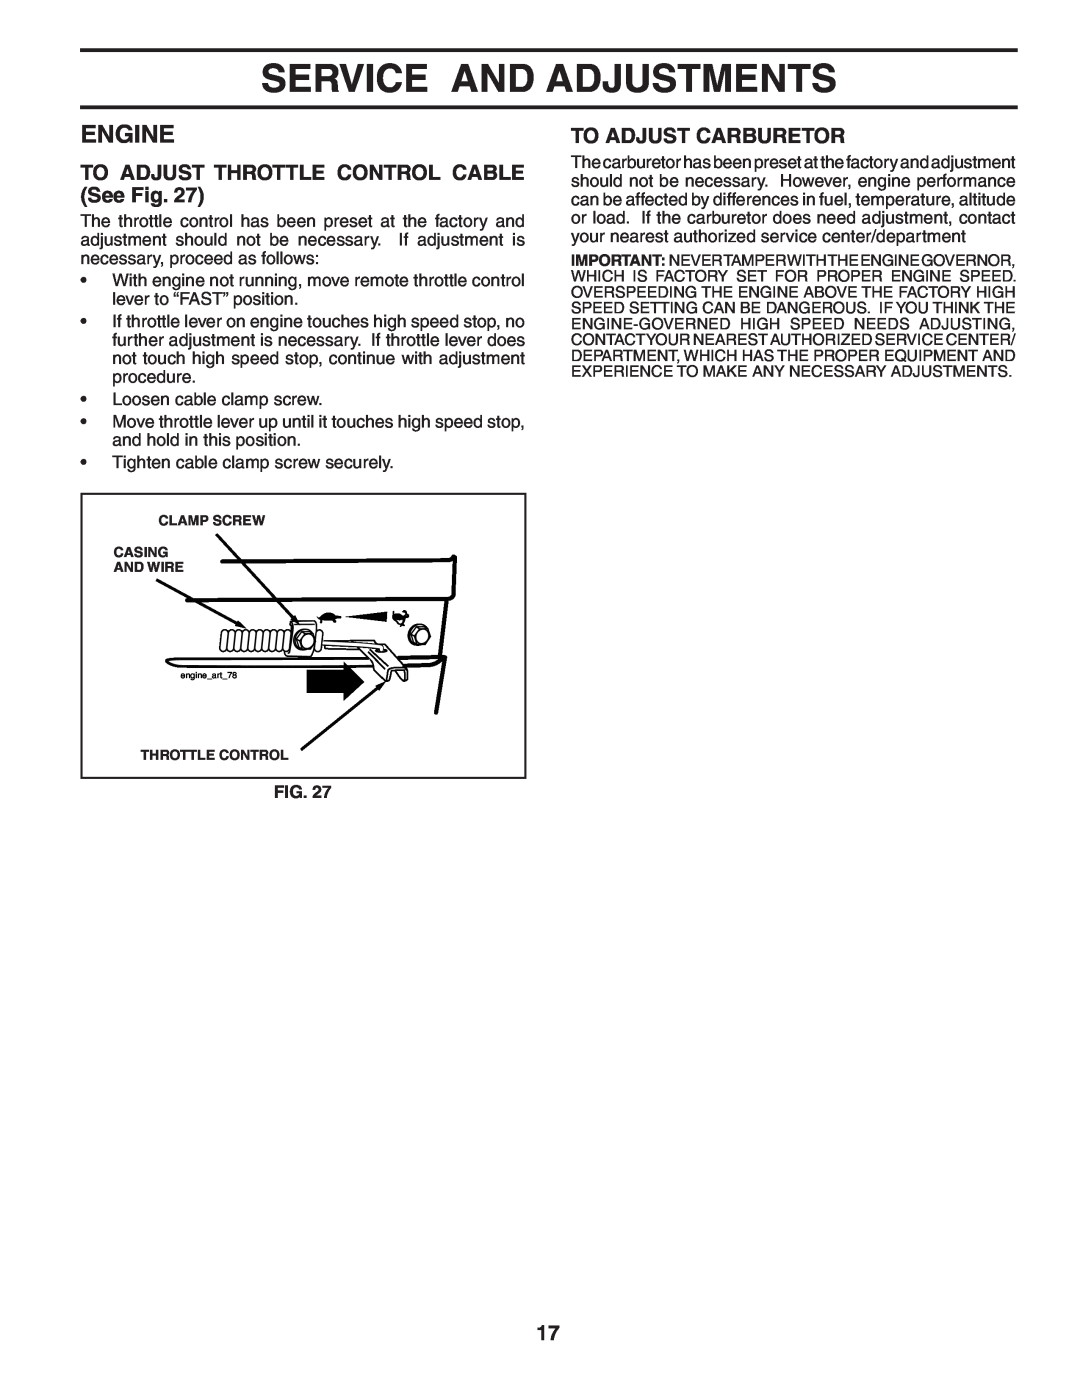 Poulan PRRT50 manual TO ADJUST THROTTLE CONTROL CABLE See Fig, To Adjust Carburetor, Service And Adjustments, Engine 